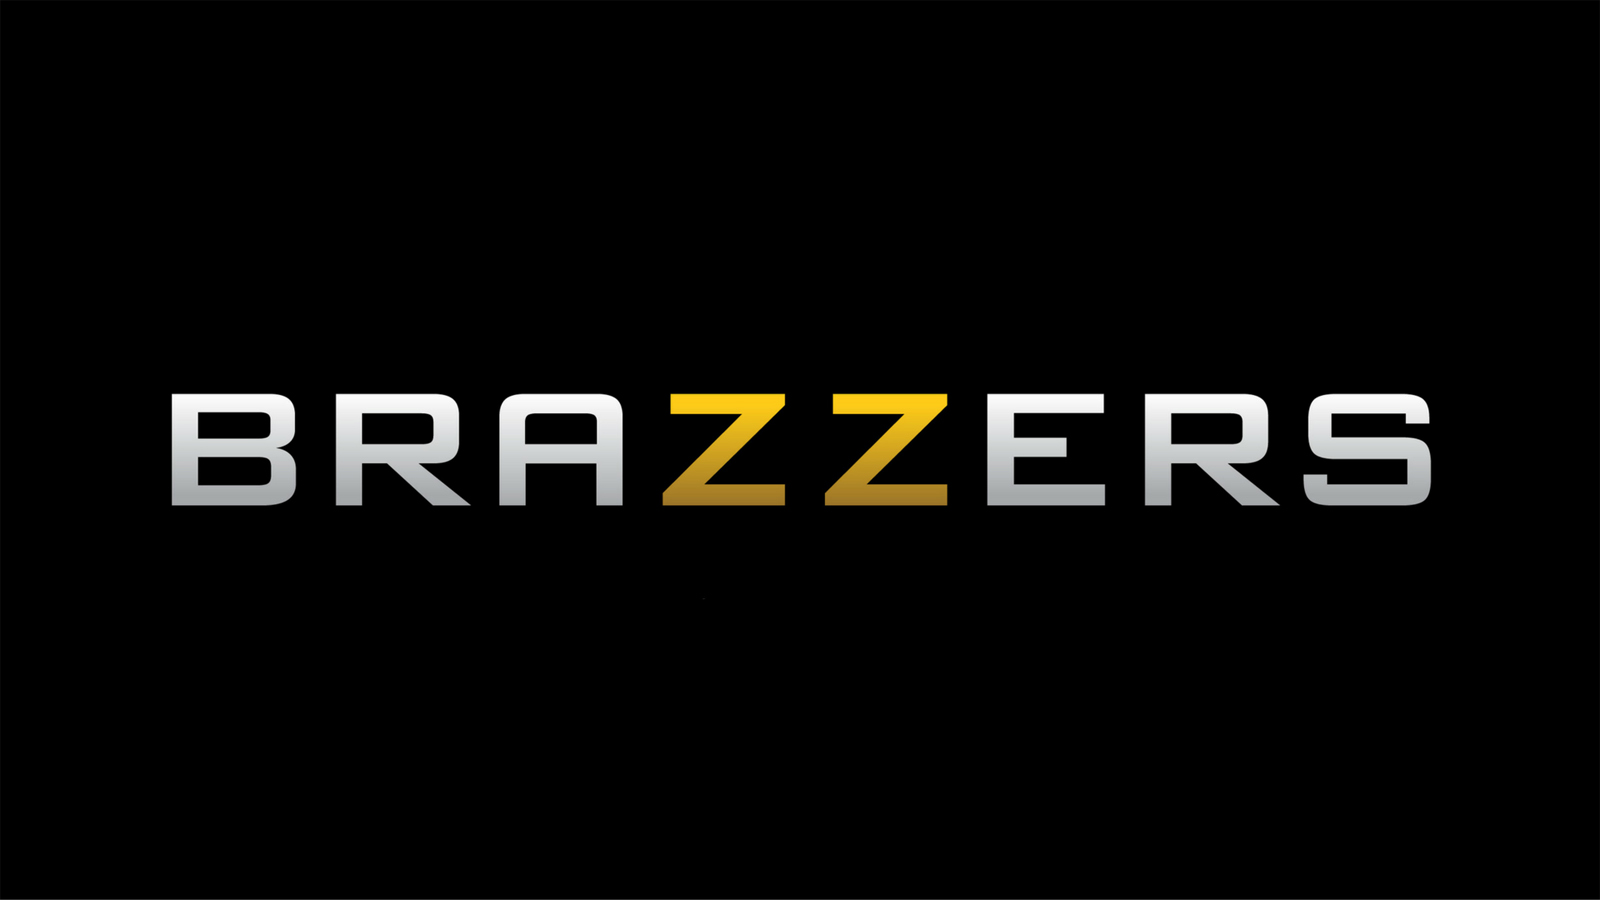 Brazzer hacked